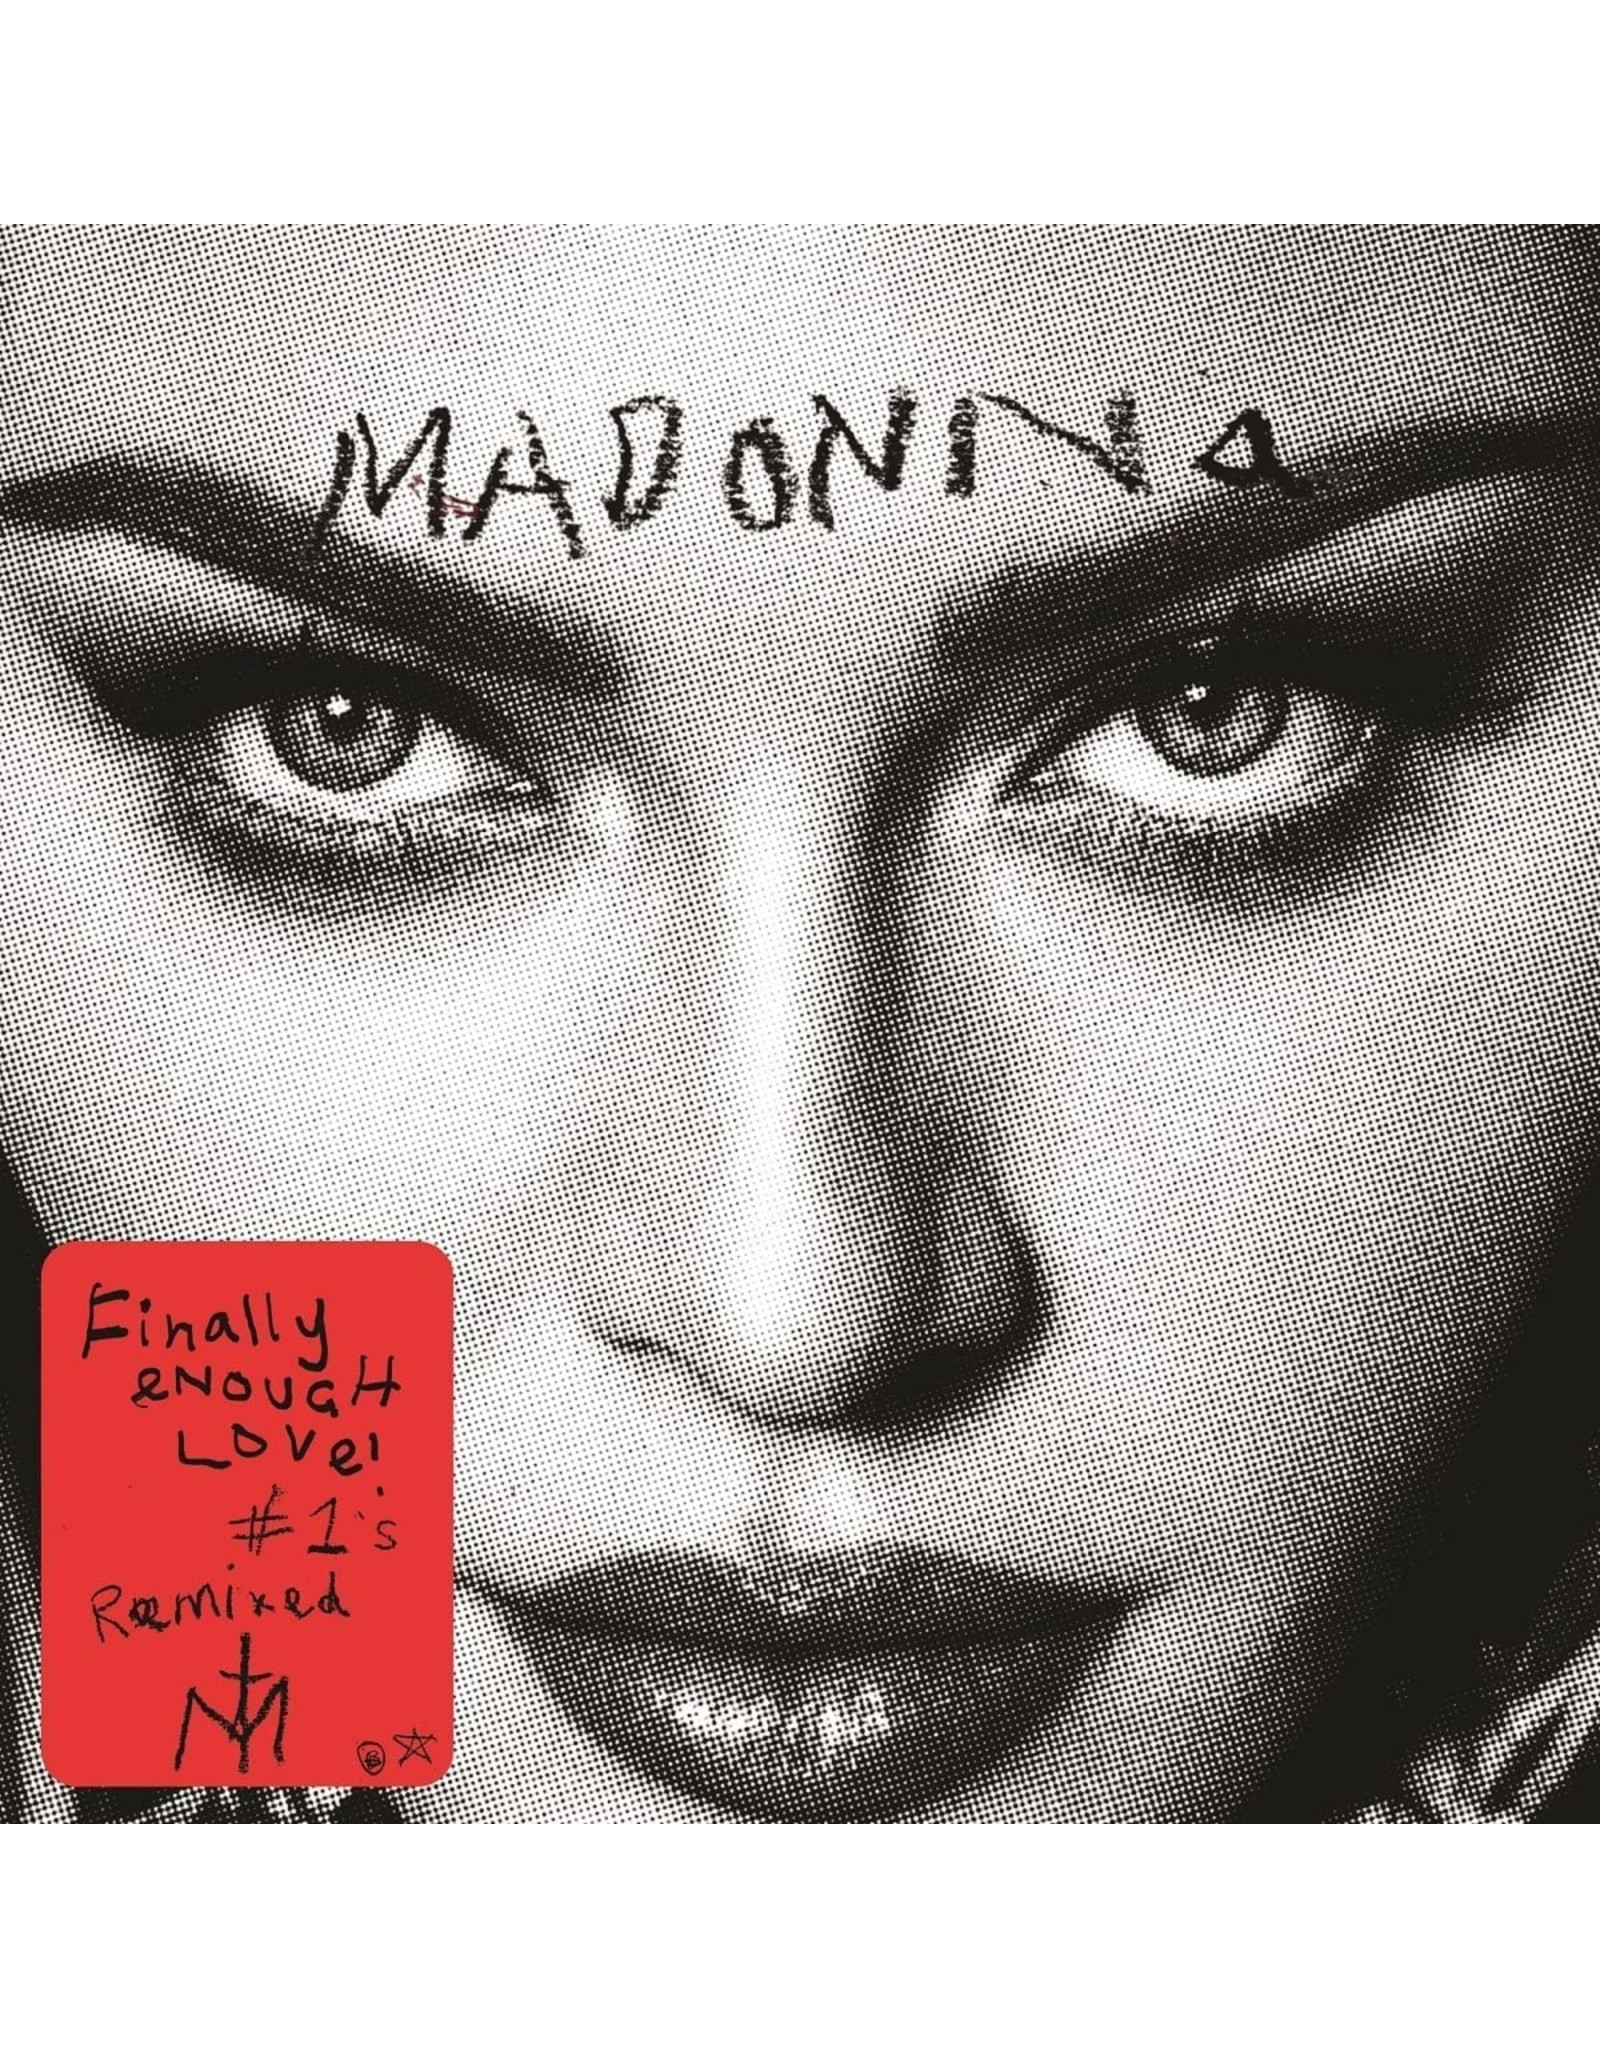 Madonna - Finally Enough Love (Black Vinyl)